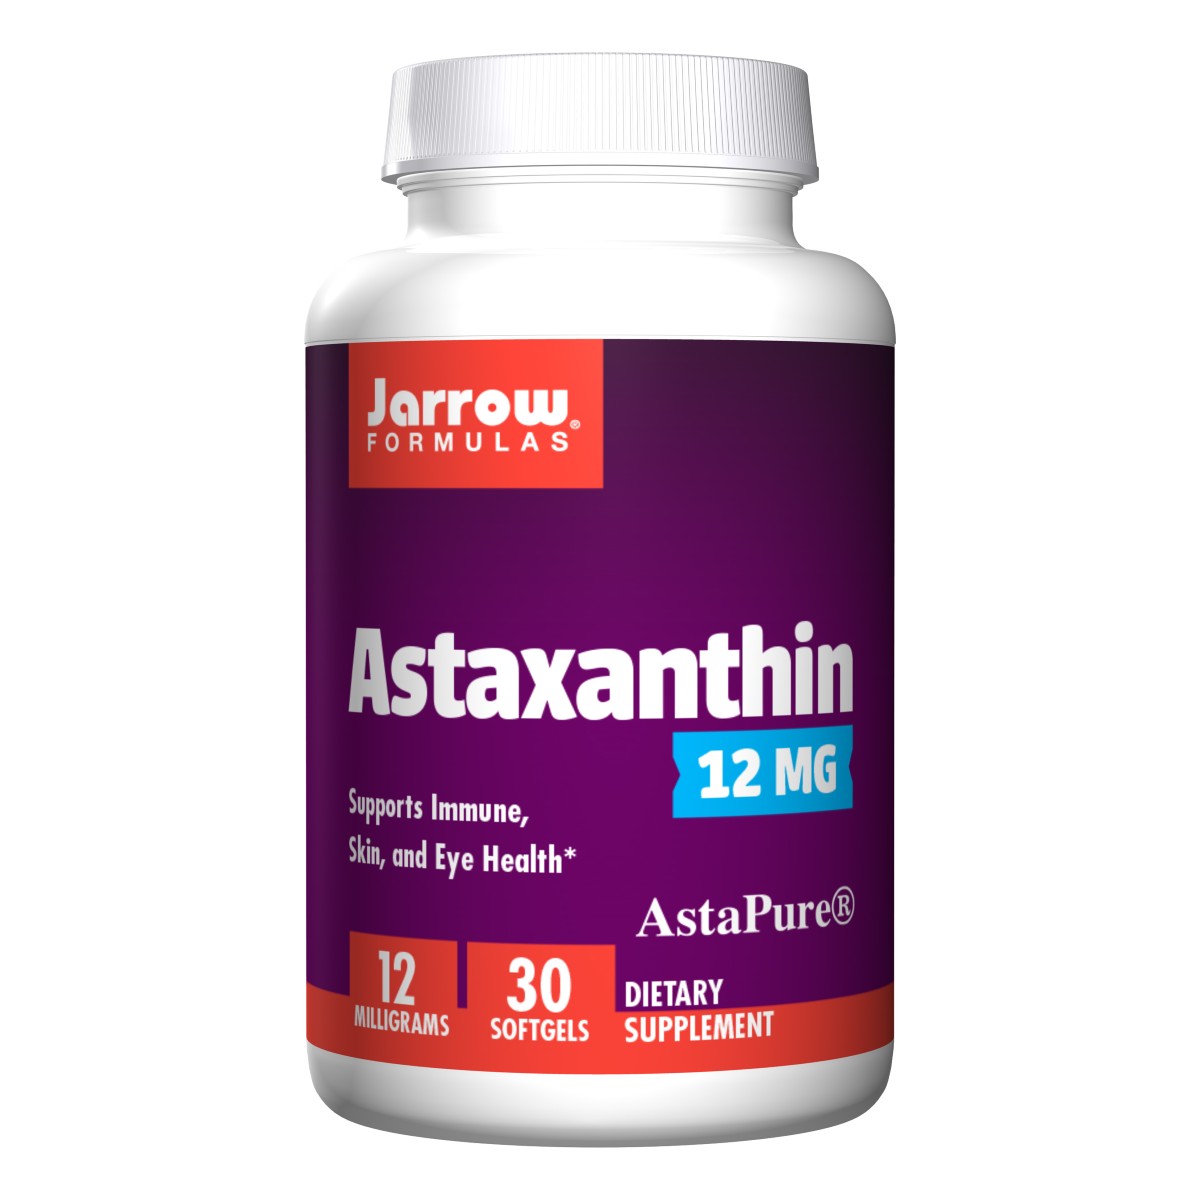 Astaxanthin - Jarrow Formulas